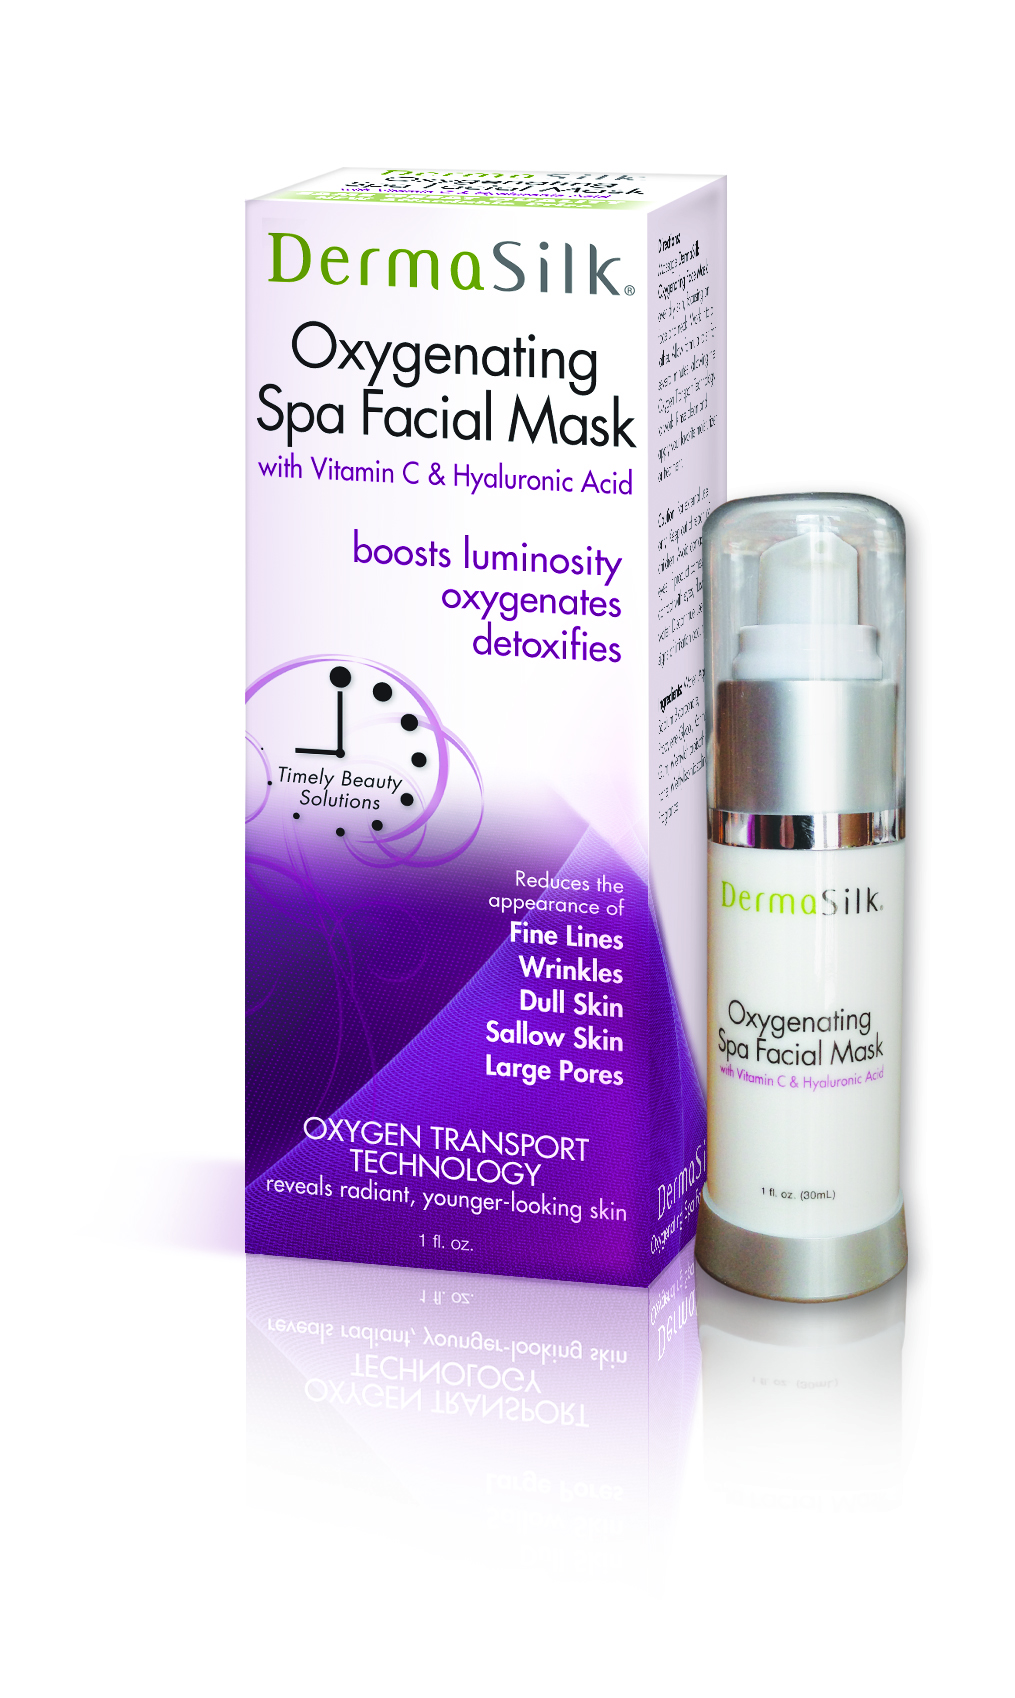 DermaSilk Oxygenating Spa Facial Mask